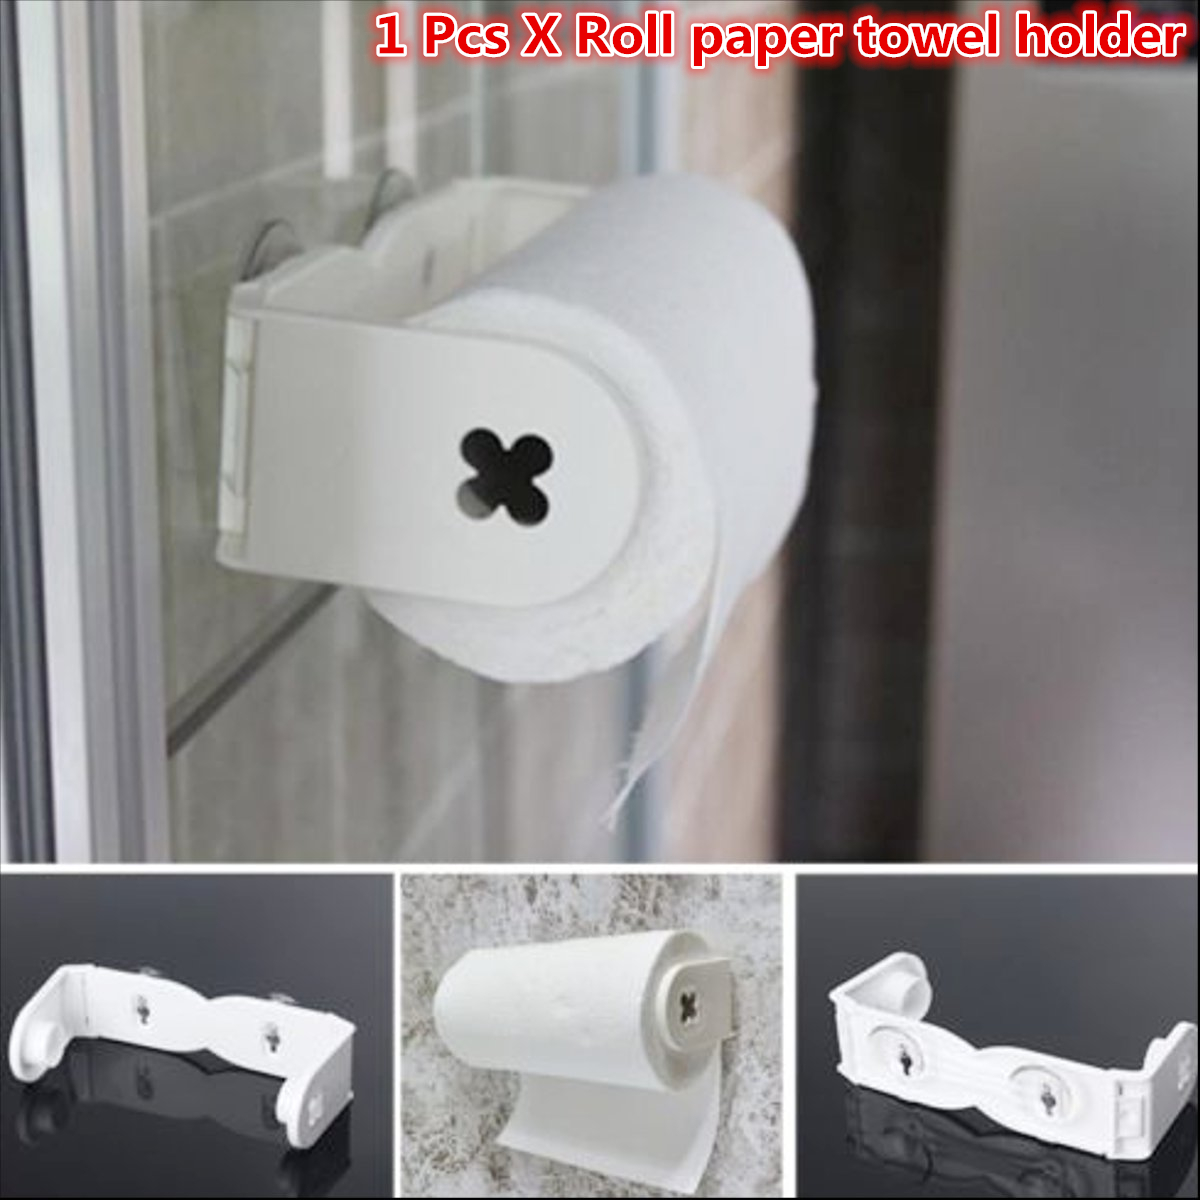 Roll-Paper-Towel-Holder-Sucker-Tissue-Rack-Kitchen-Bathroom-Cabinet-Wall-Mount-1708461